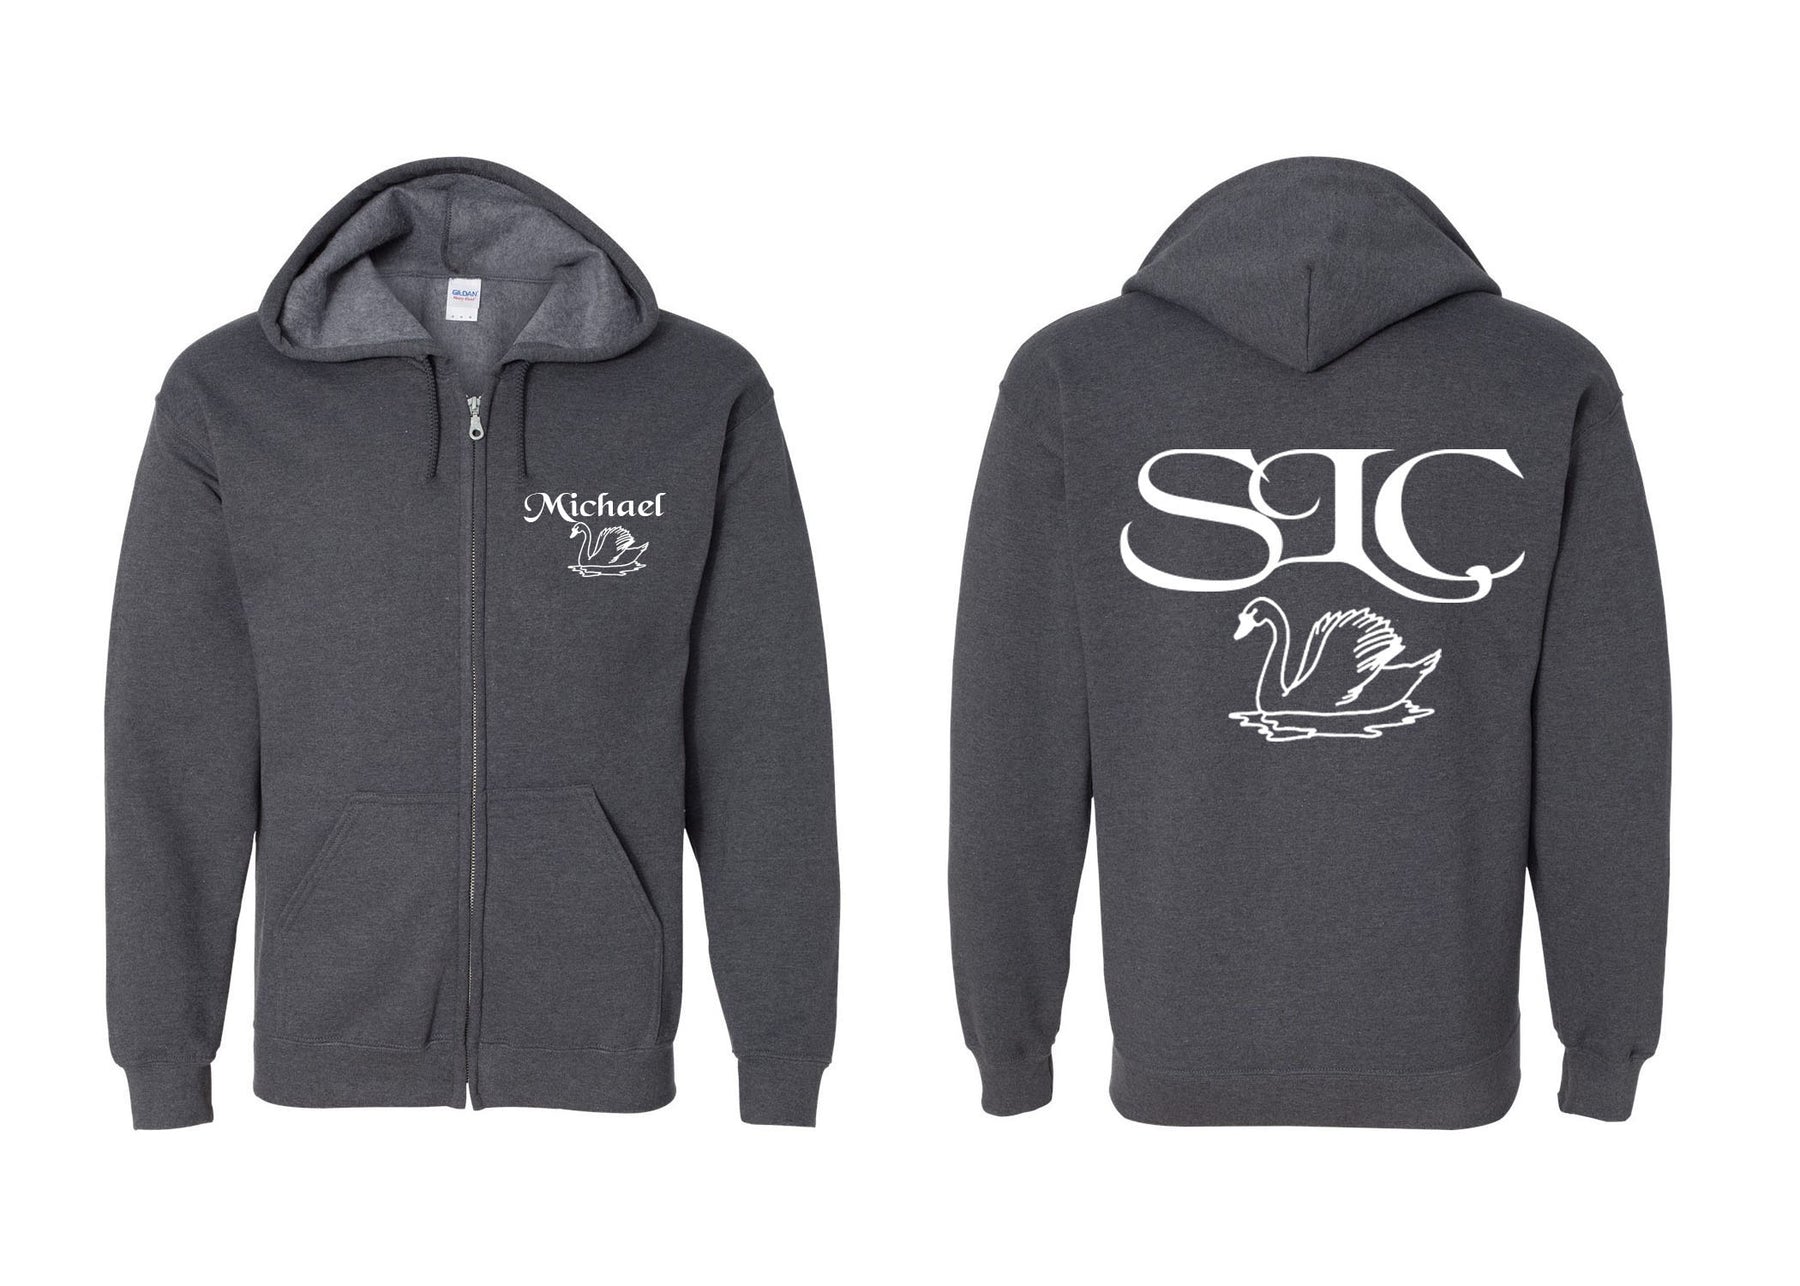 Seneca Lake design 6 Zip up Sweatshirt